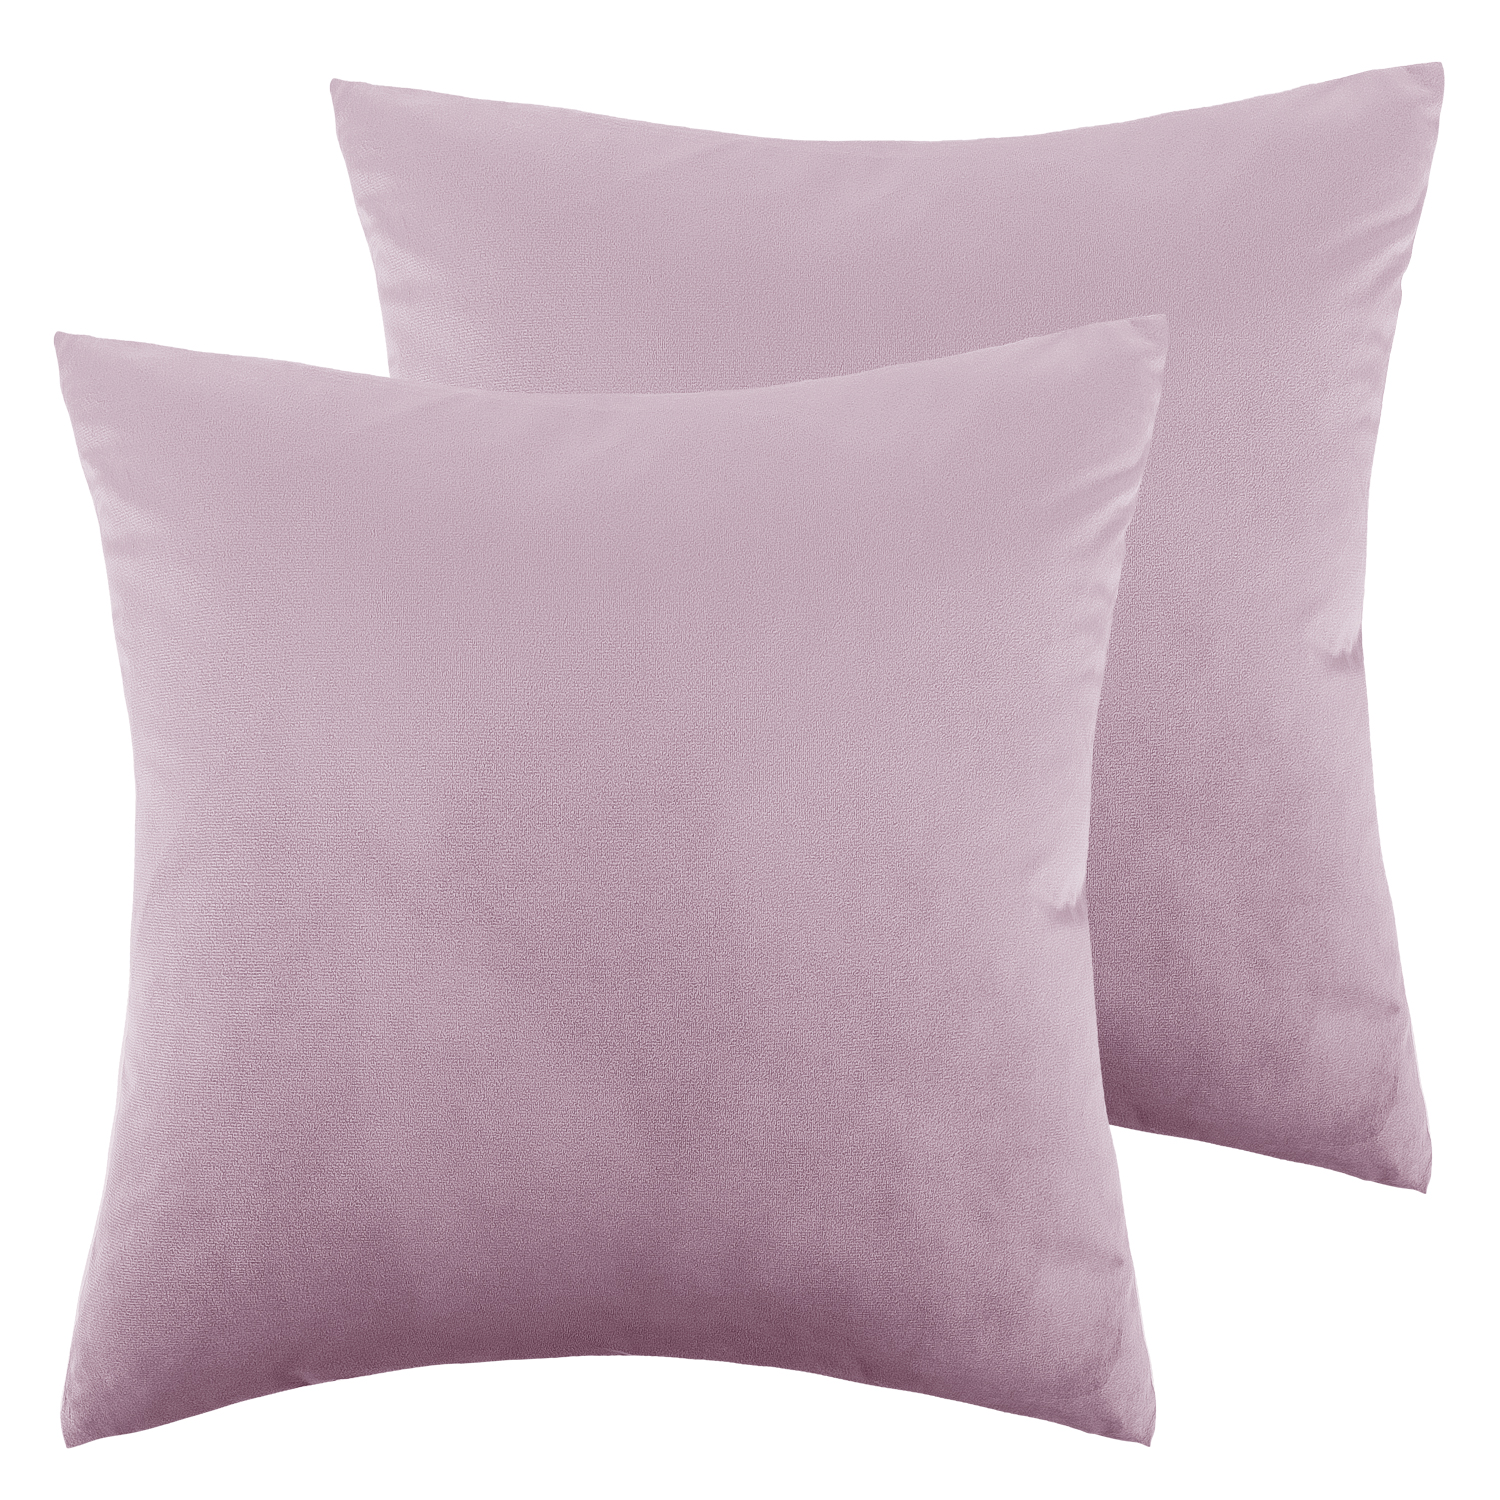 Solid Color Square Pillow Case Soft Velvet Cushion Cover for Home Sofa Car Decor